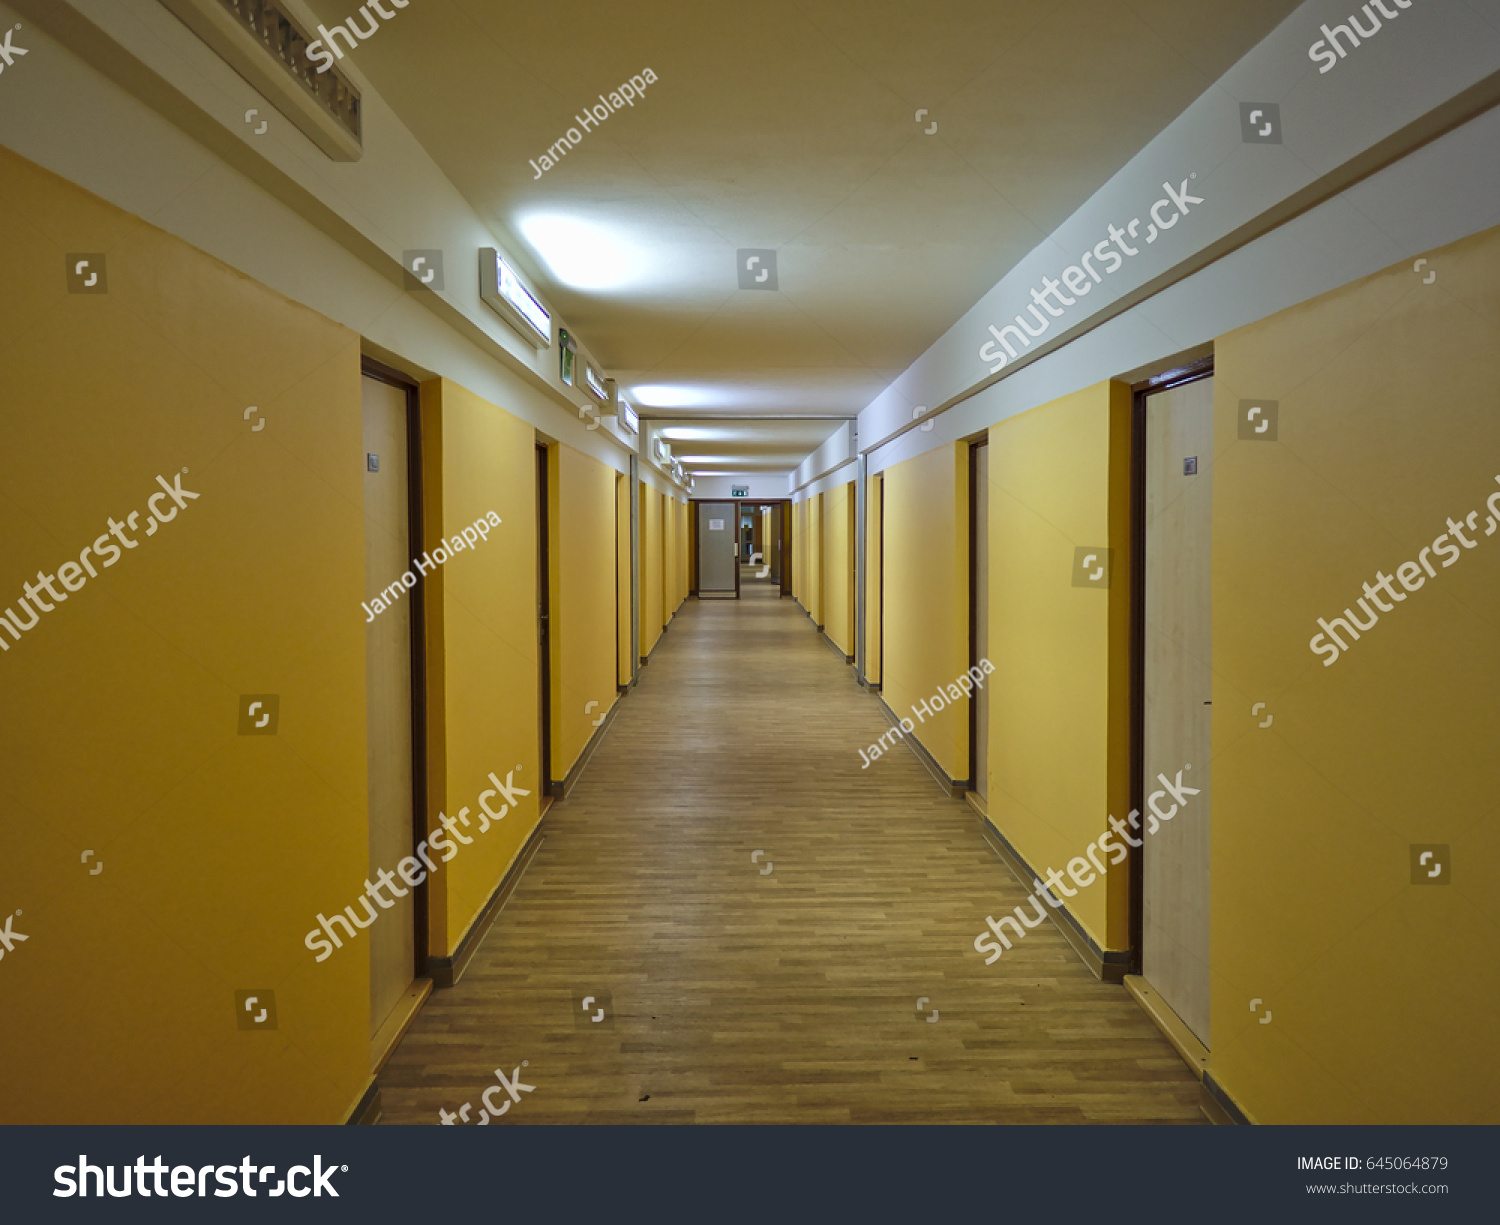 Long empty dormitory corridor with vintage style. #645064879